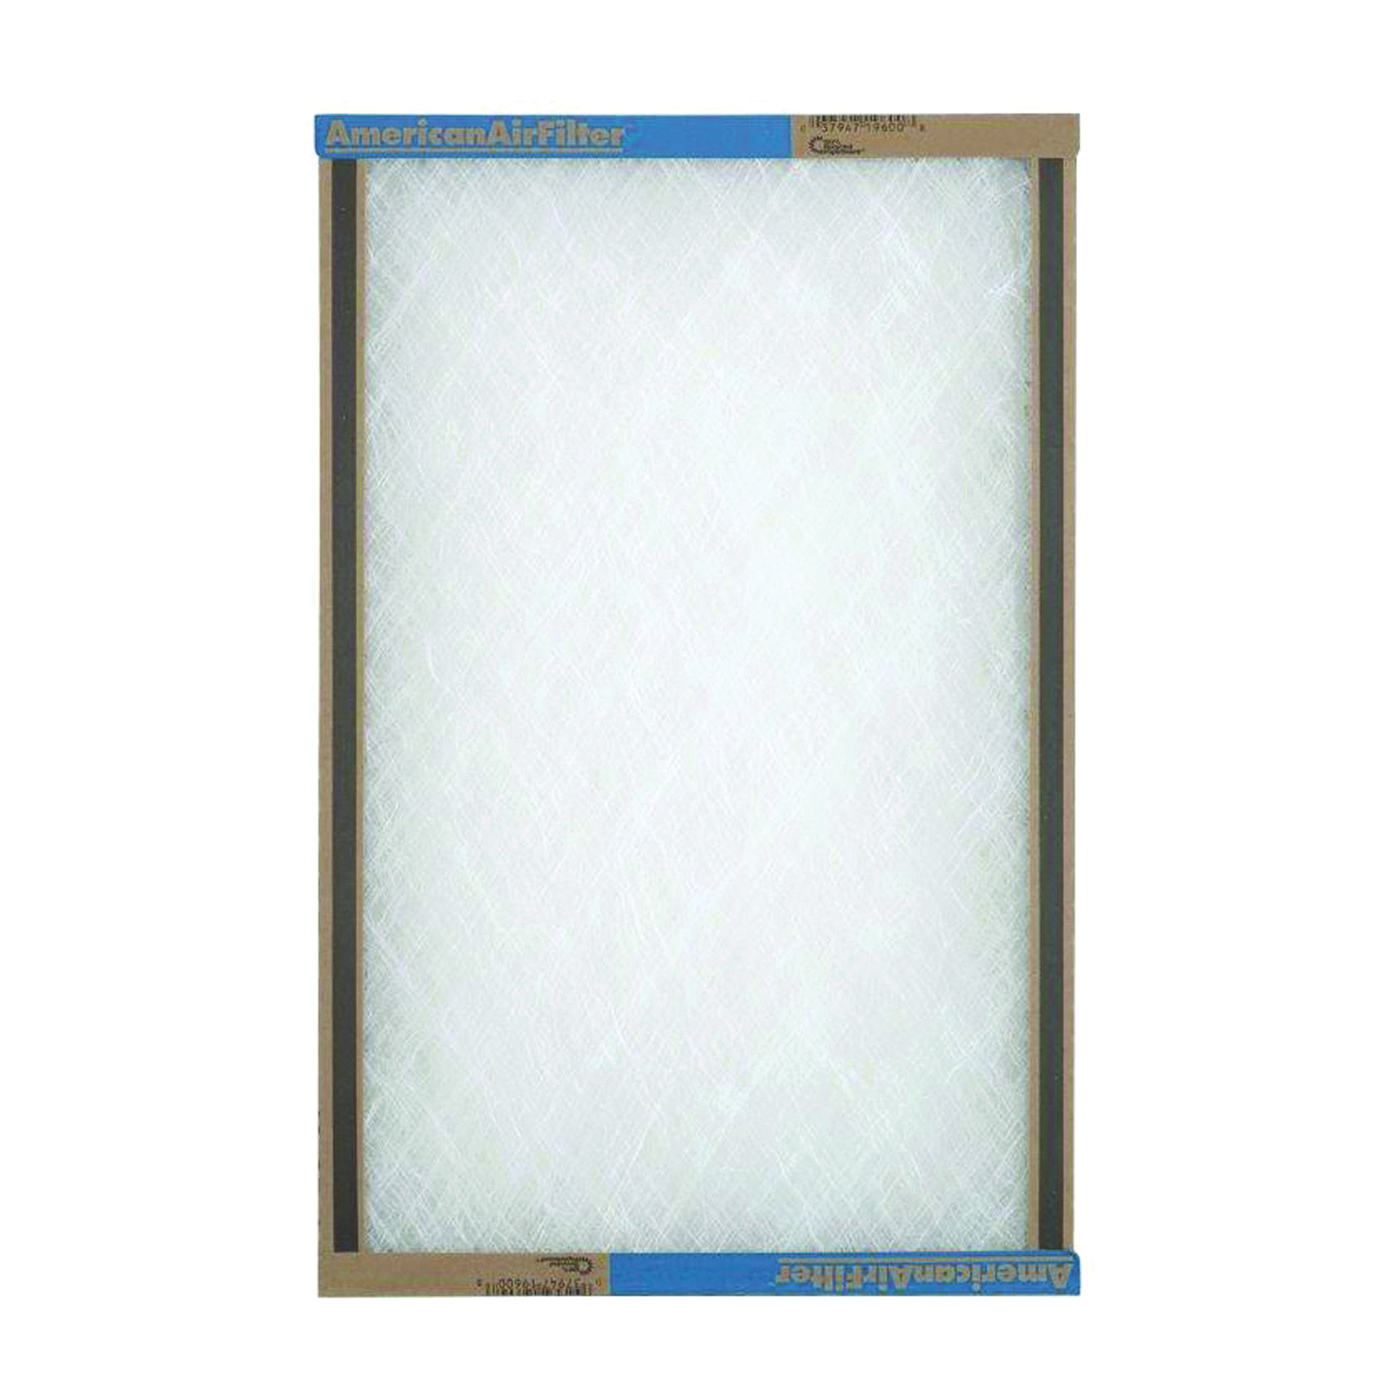 124241 Panel Air Filter, 24 x 24 x 1, Chipboard Frame